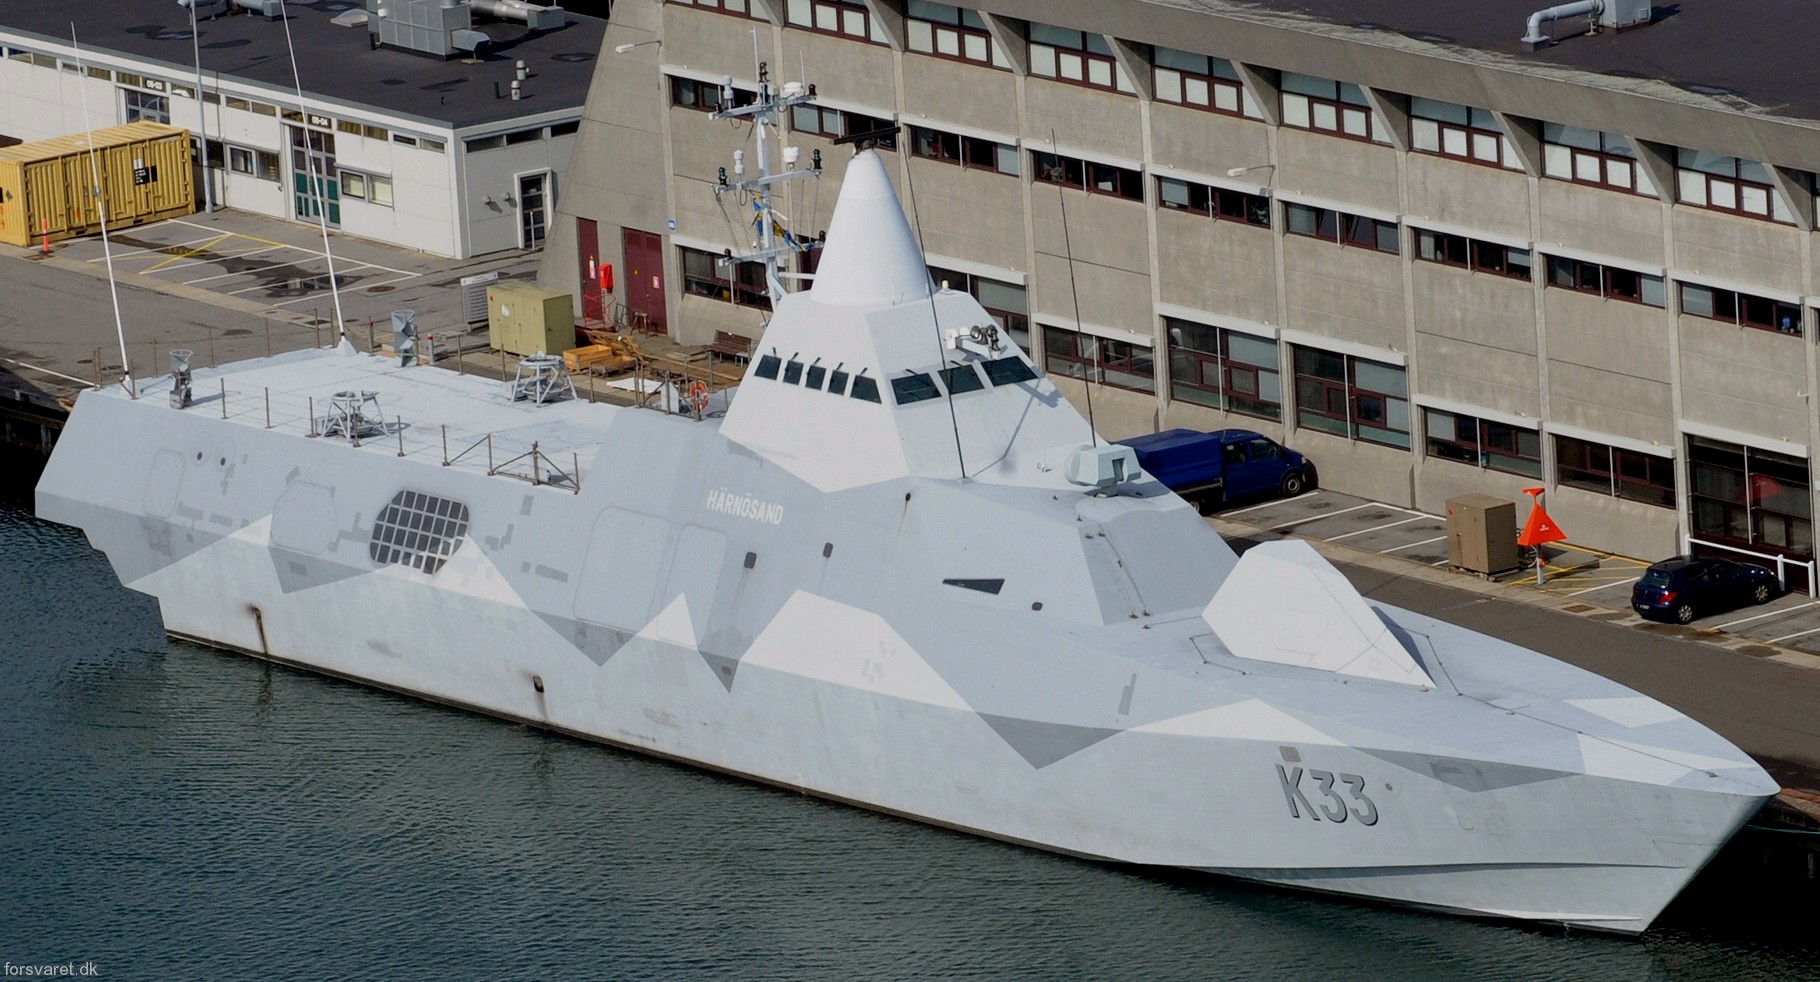 k33 hswms hms harnosand visby class corvette royal swedish navy svenska marinen 05